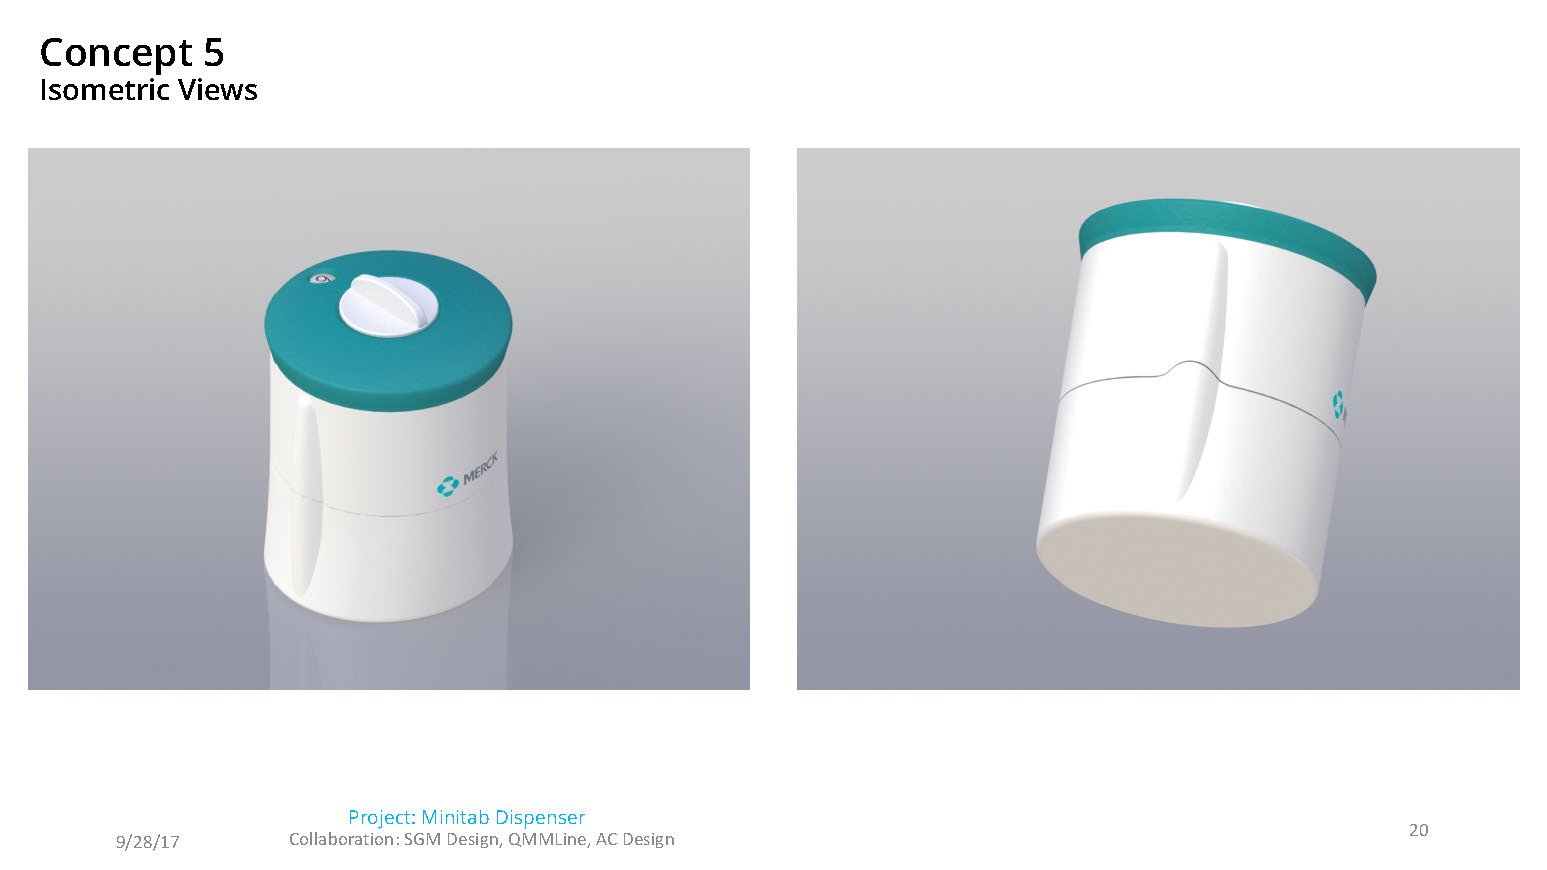 Minitab Dispenser Merck - Concept 1-5.REV_Page_20.jpg